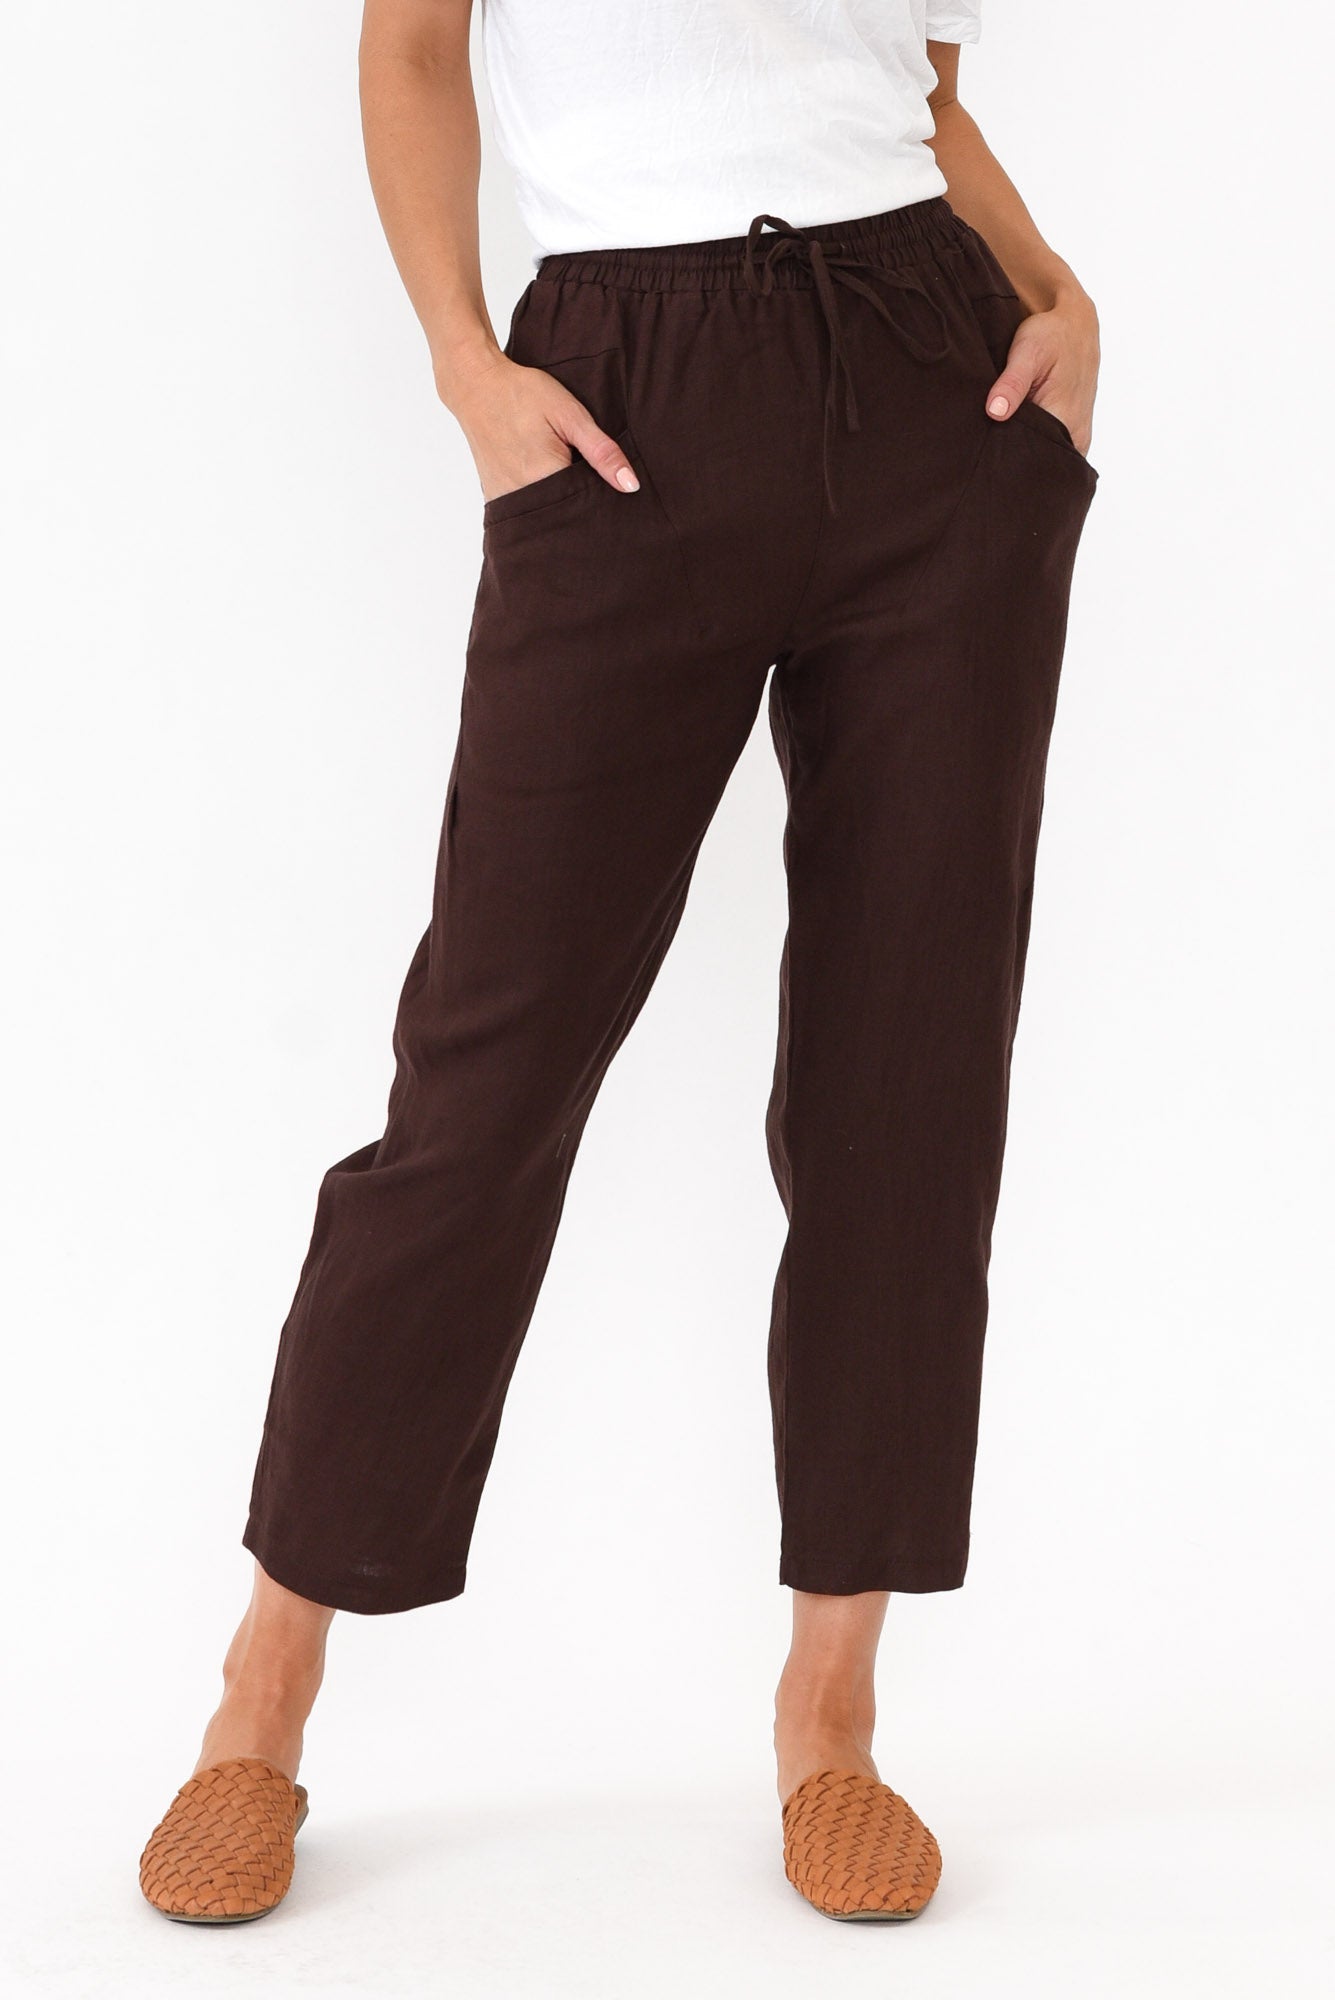 Buy Umber Brown Mens Linen Trousers Online  Genes online store 2020